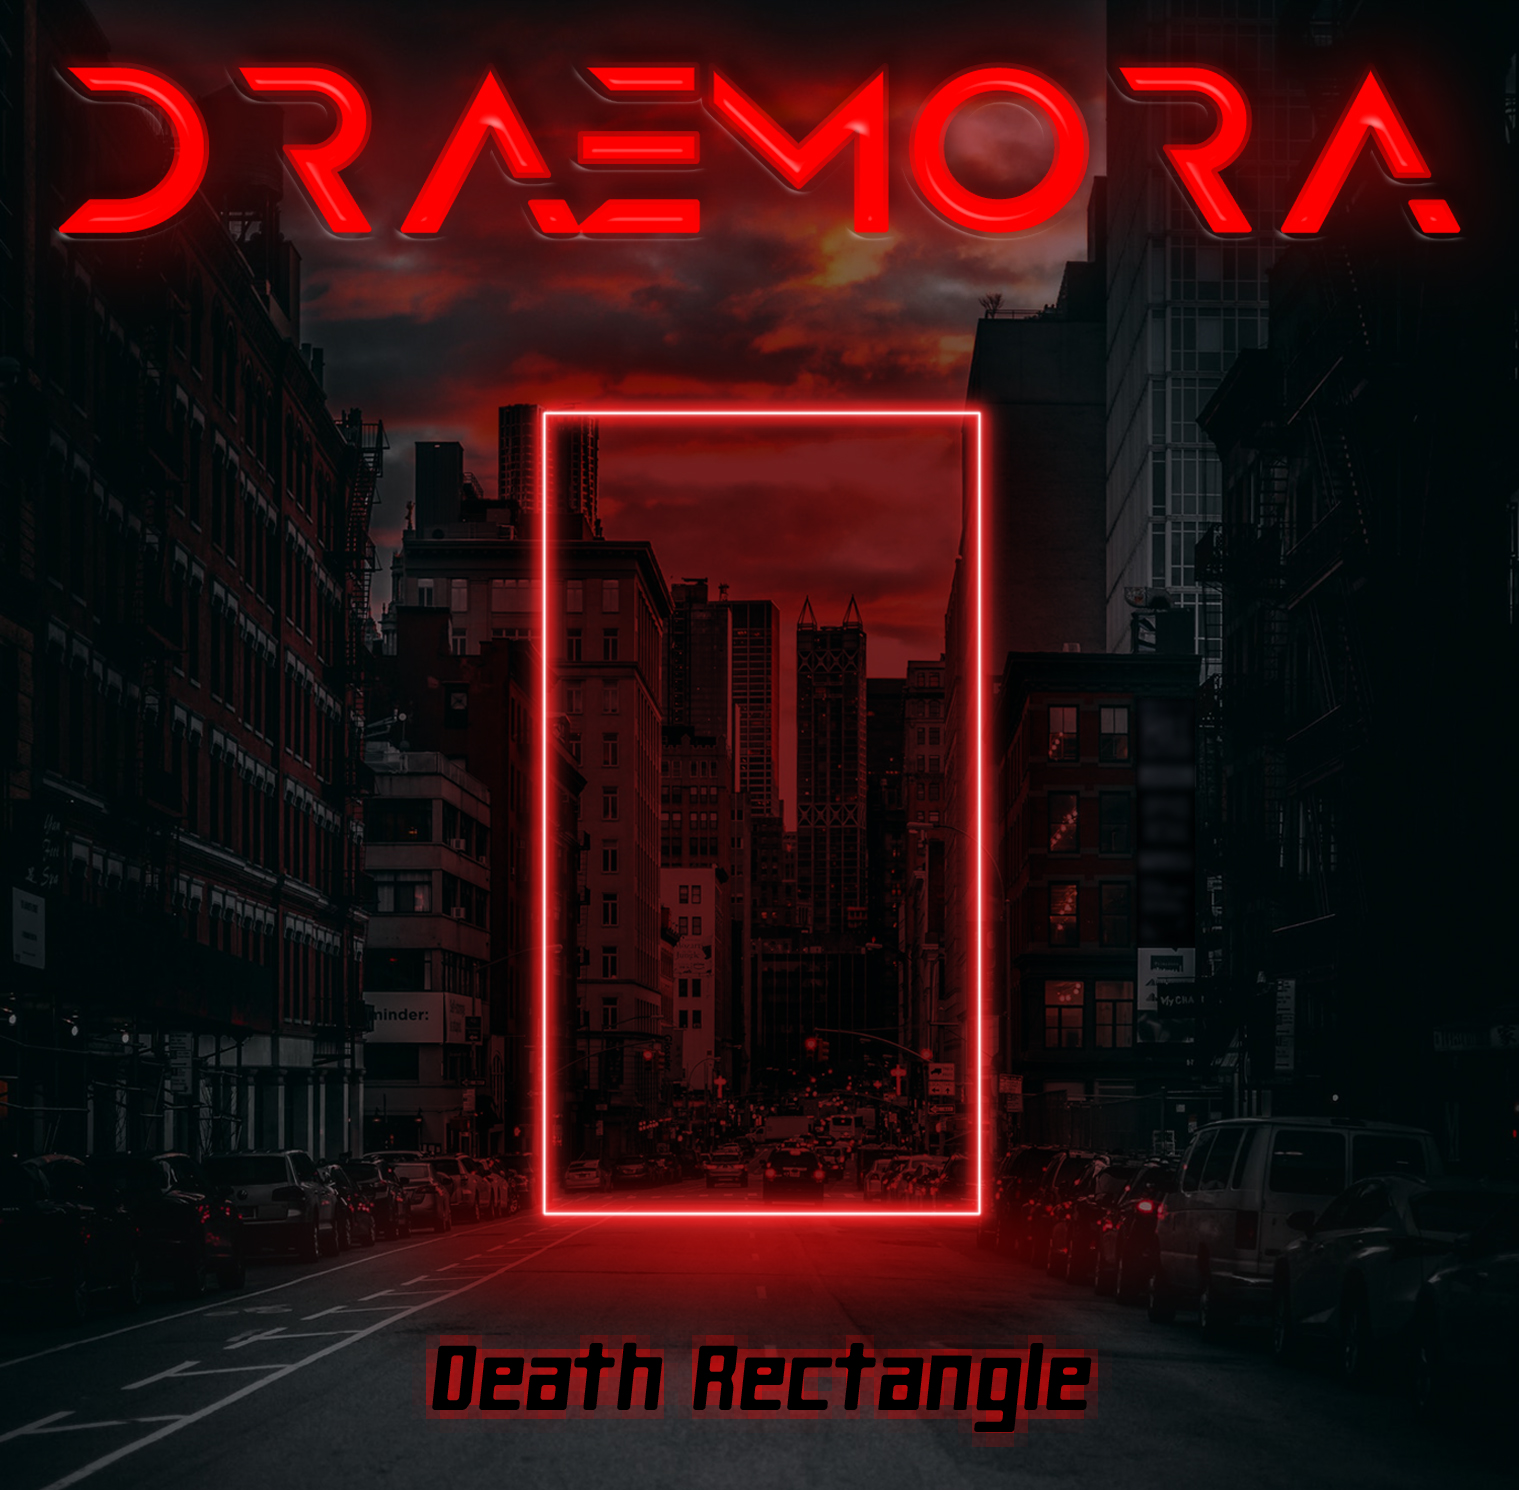 Draemora – Death Rectangle